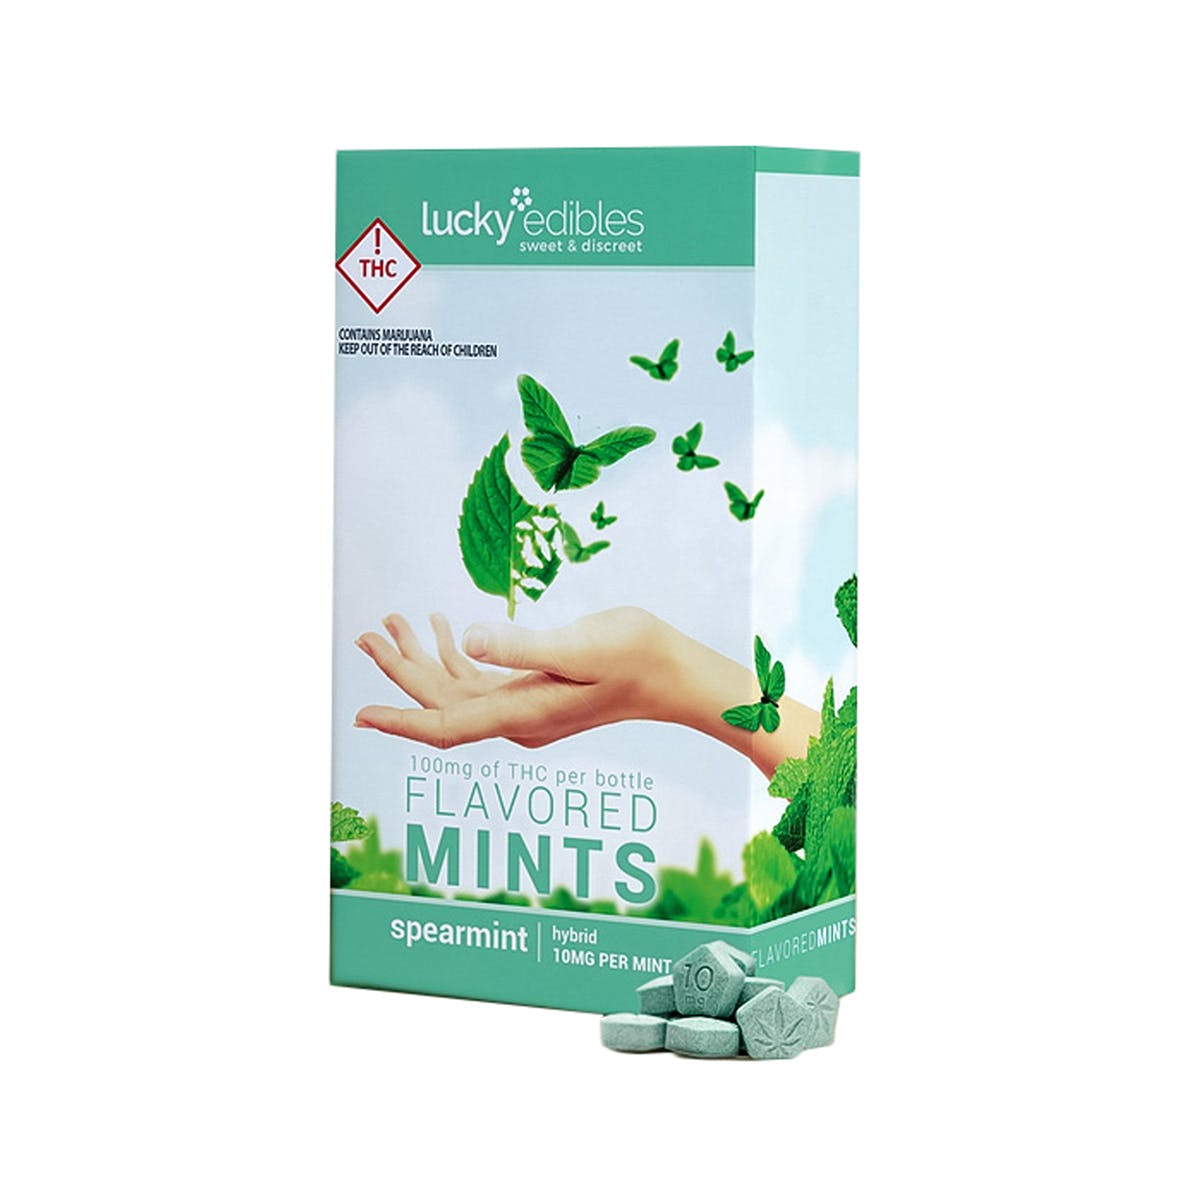 edible-altus-lucky-edibles-spearmint-mints-100mg